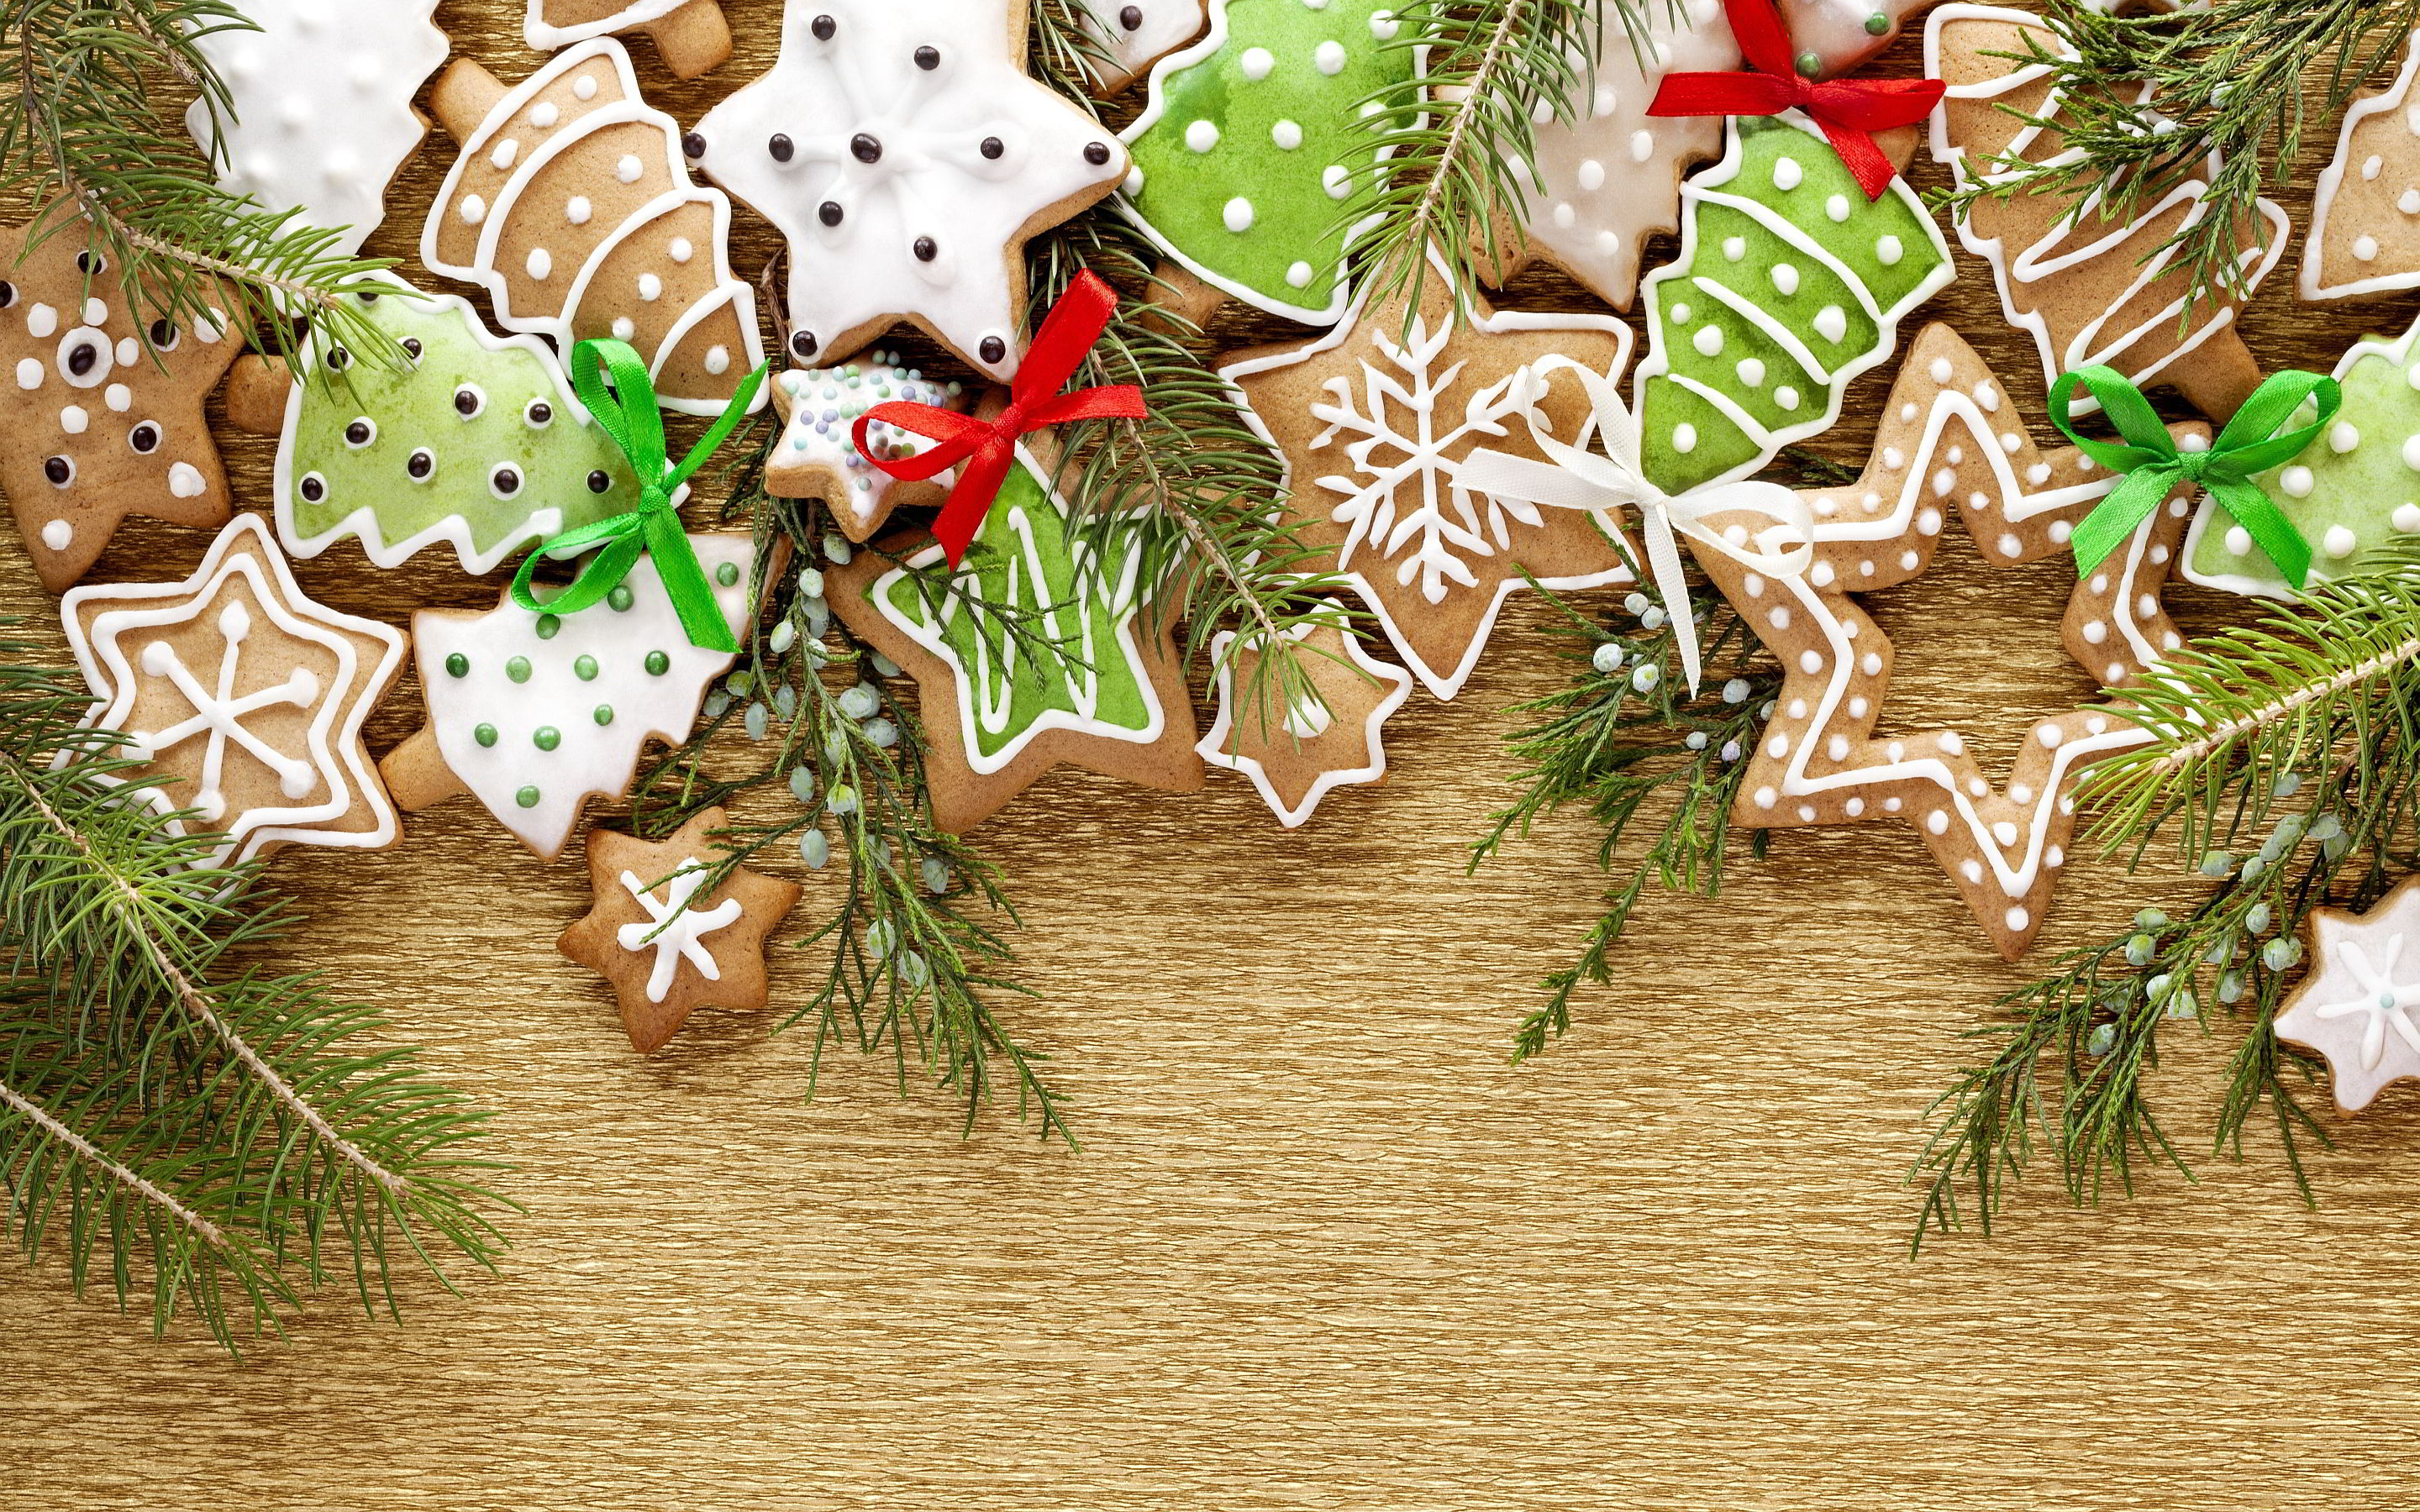 Christmas Cookies Wallpaper 40526 2880x1800 px